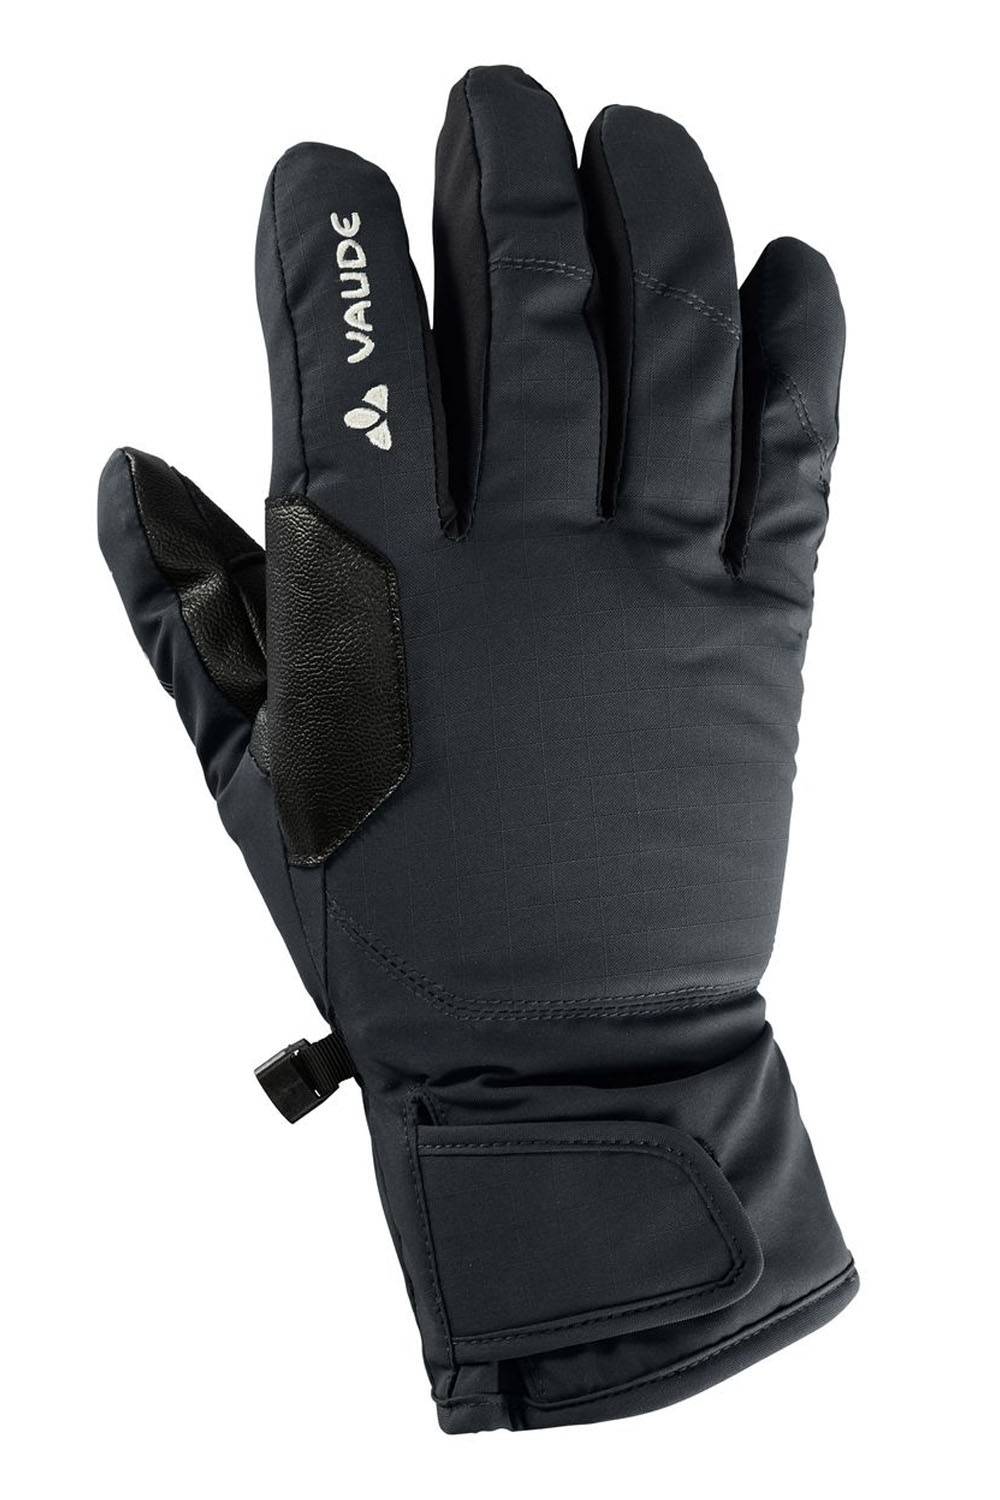 vaude vegan leather gloves